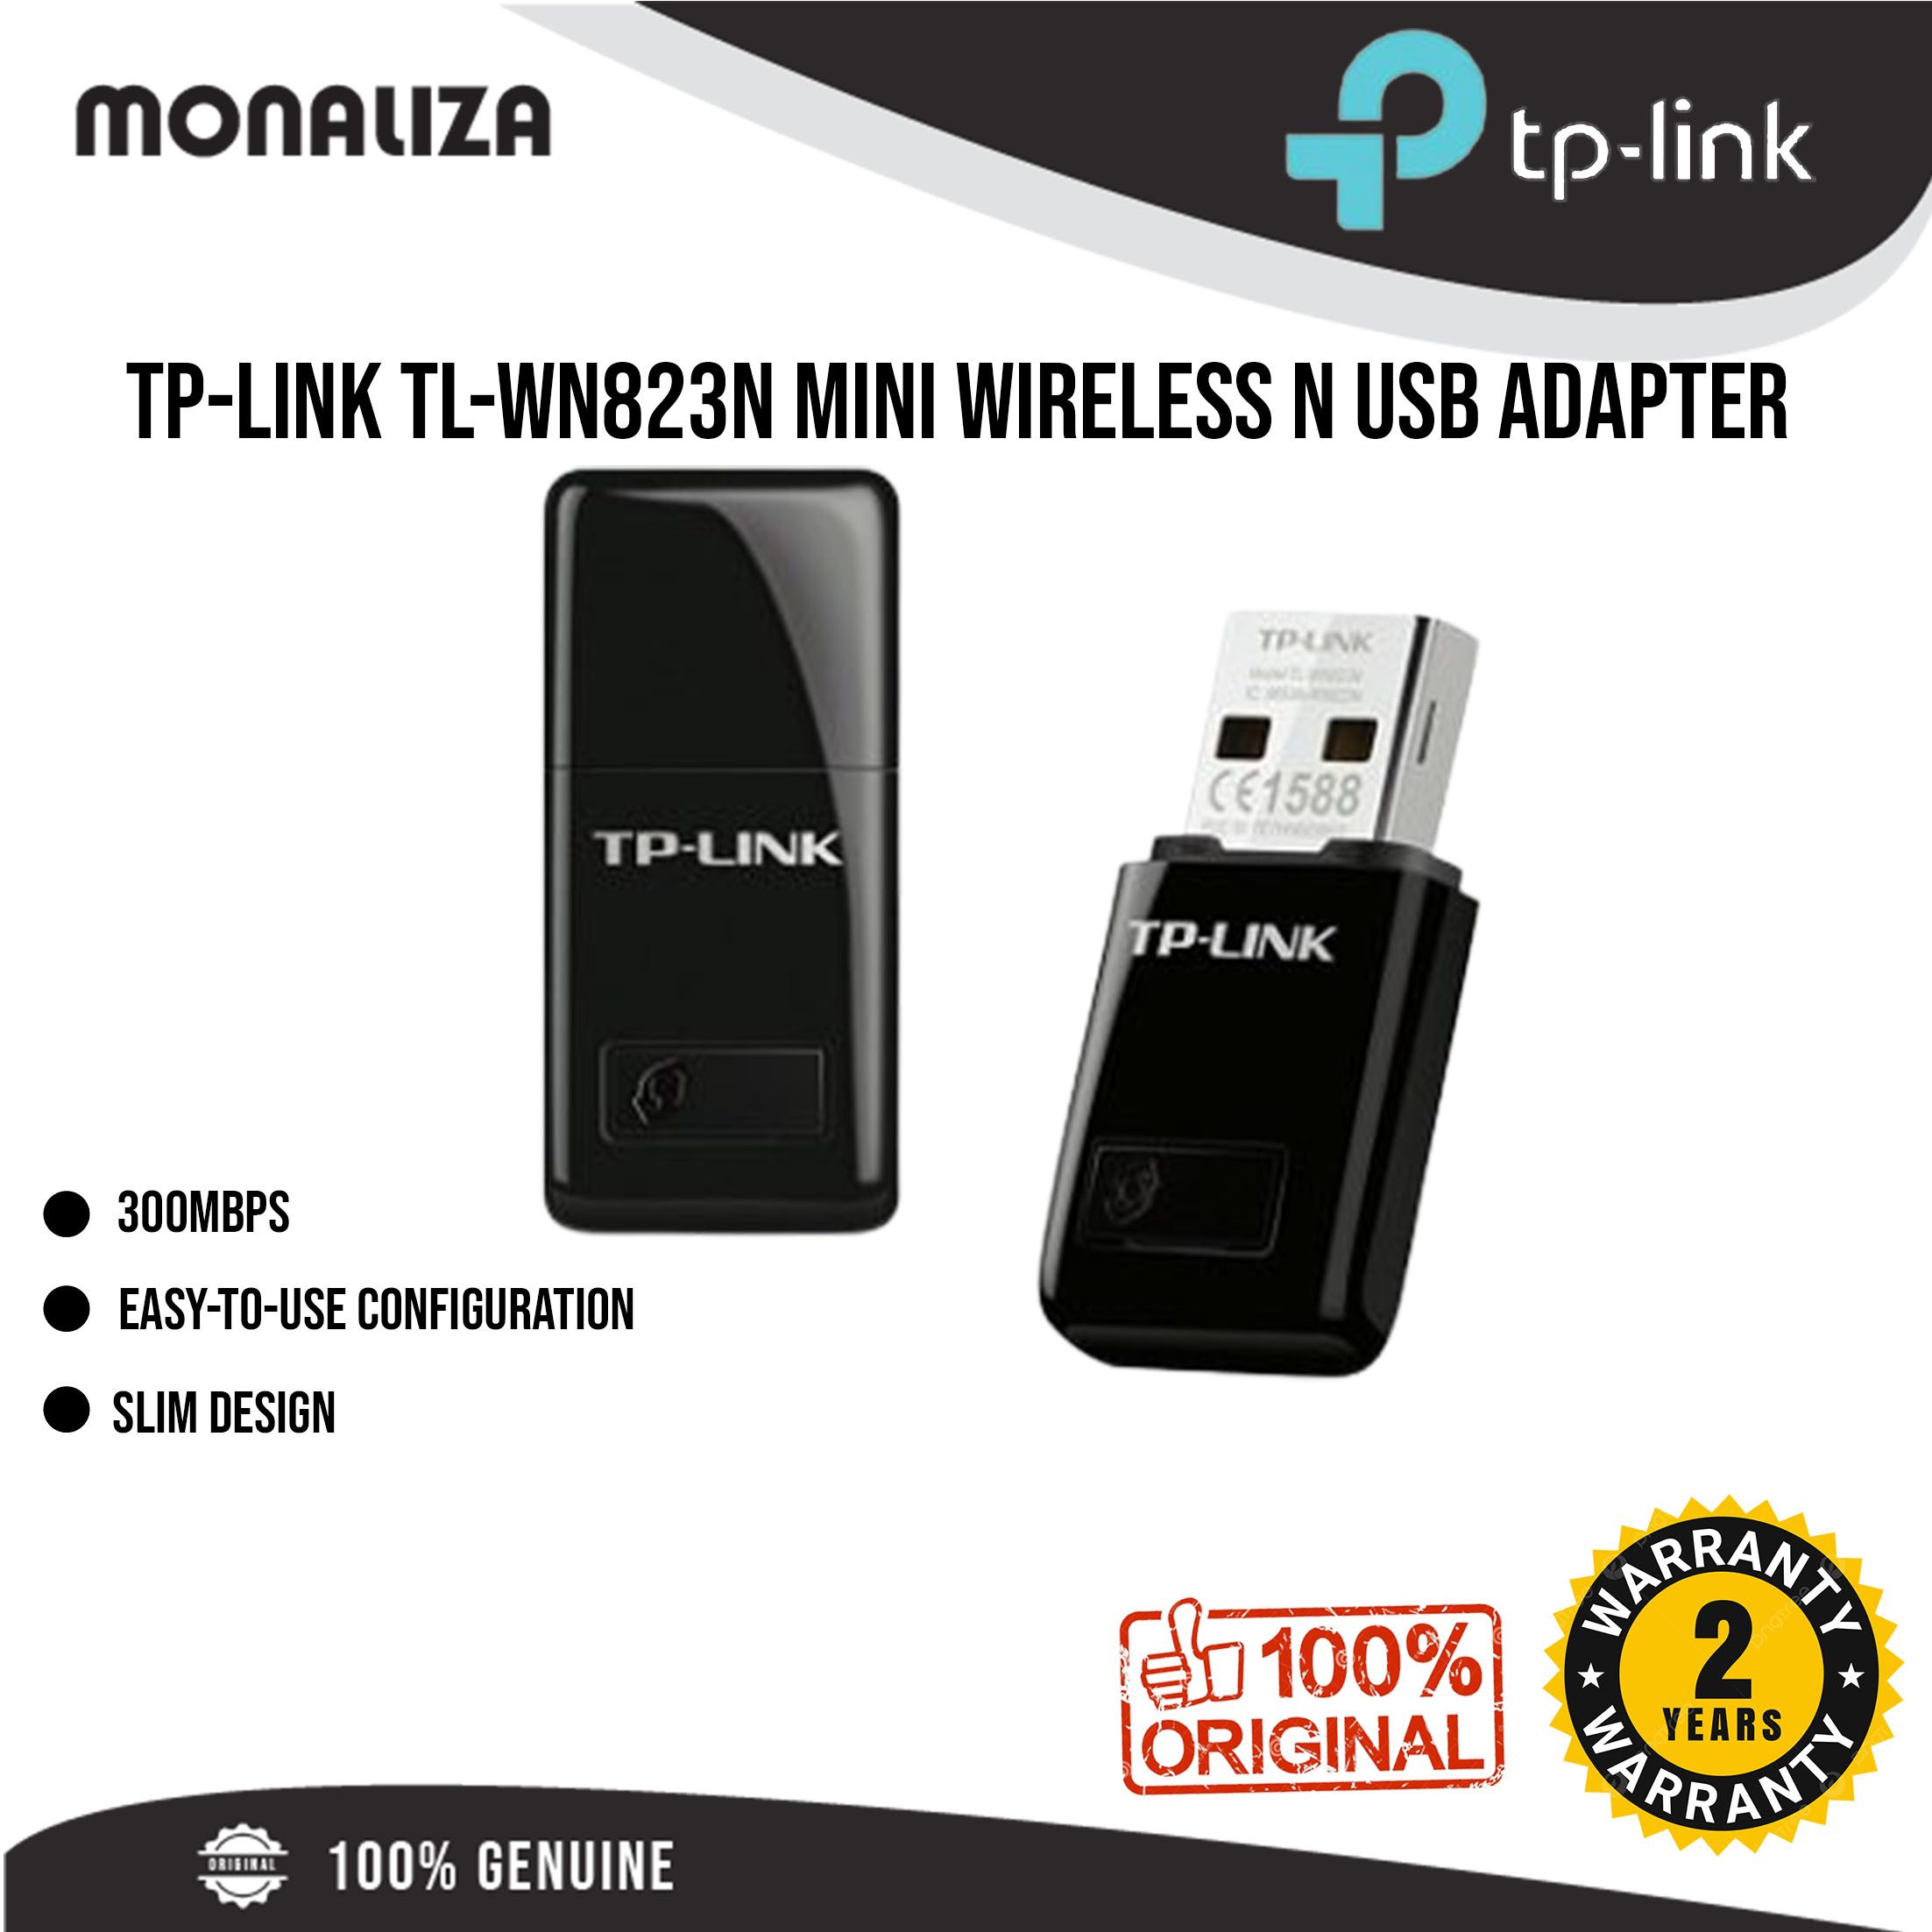 Tp-Link Mini Wireless N Usb Adapter TL-WN823N Monaliza 300mbps 